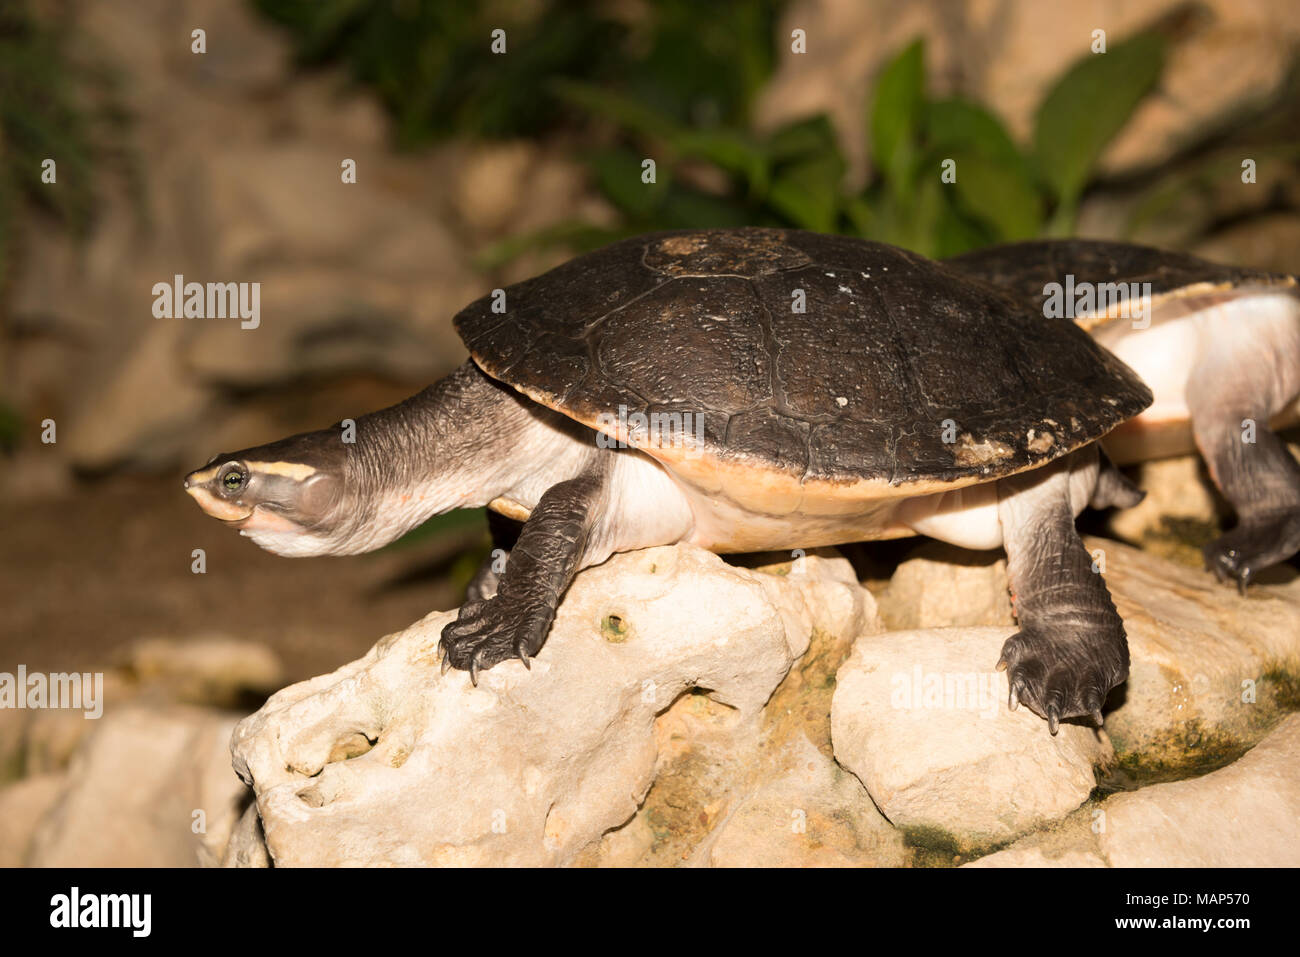 Red-Bellied Short-Necked Turtle (Emydura subglobosa) Stock Photo